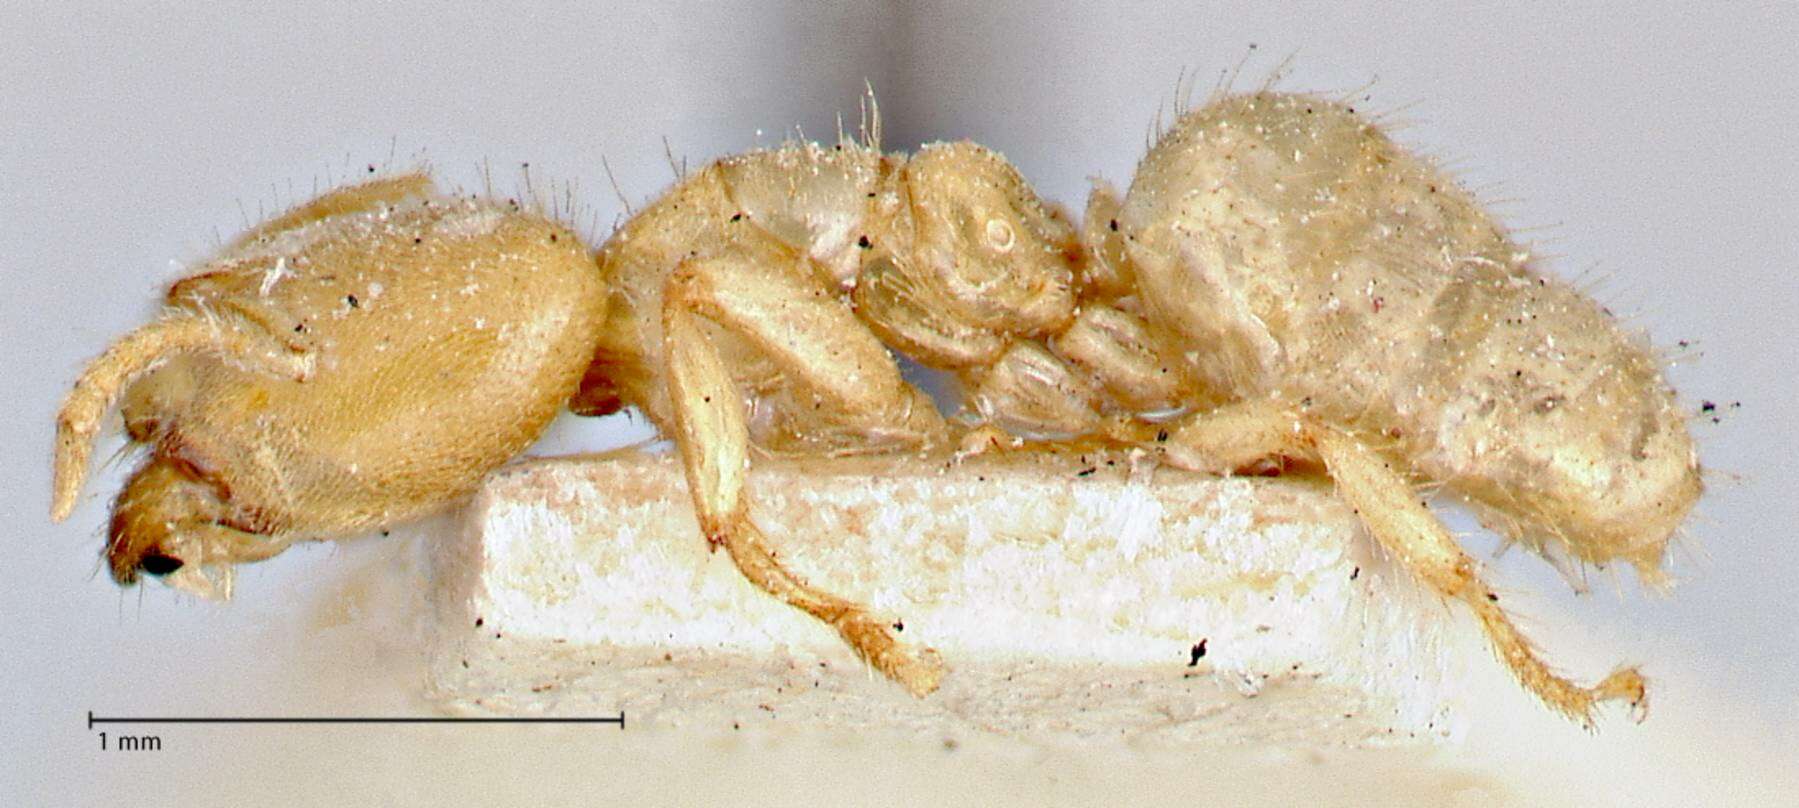 Image of Pseudolasius amblyops Forel 1901